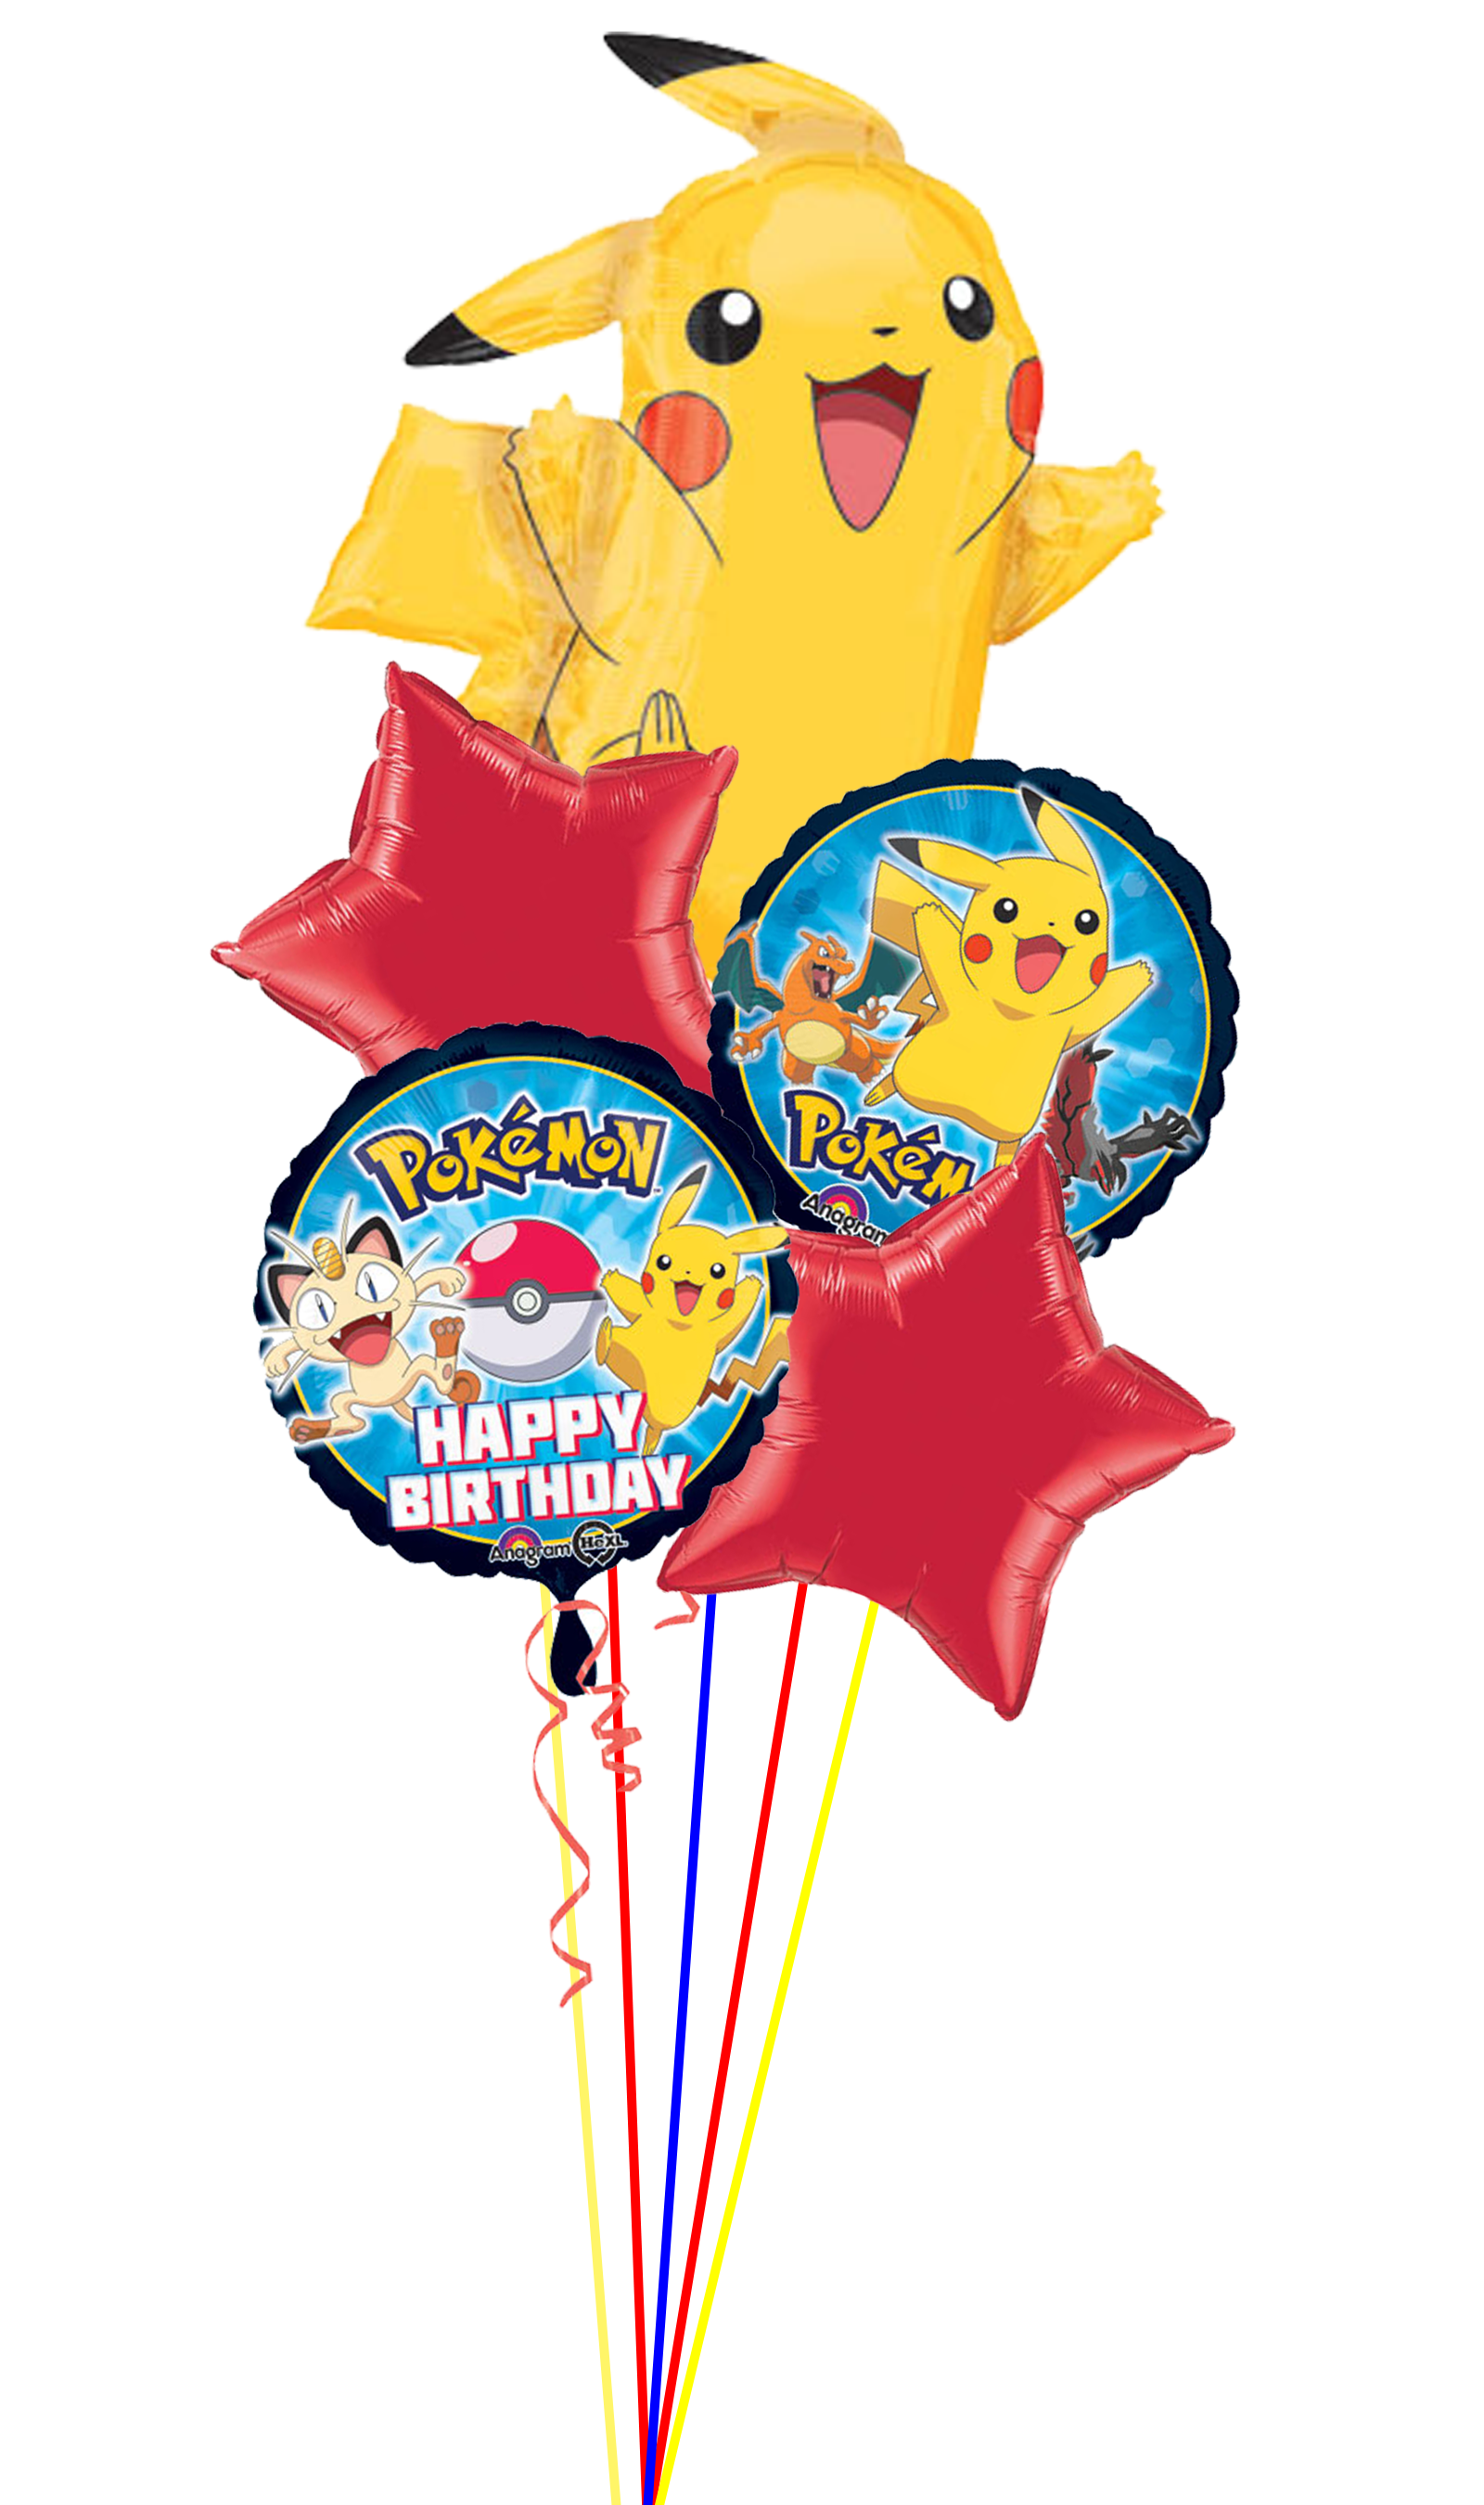 Pokemon Pikachu Birthday Balloon Party 5 counts Foil Balloons Bouquet 